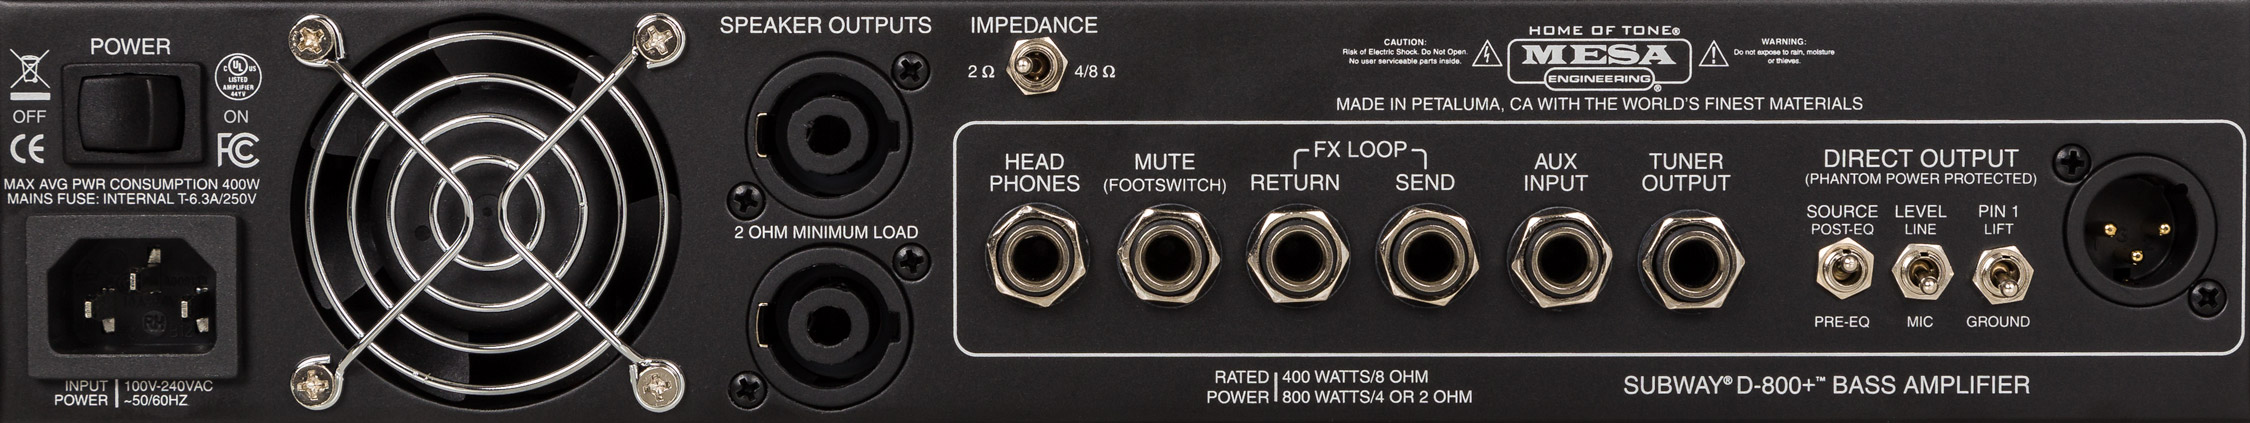 Subway D-800+ Bass Amp Back Panel